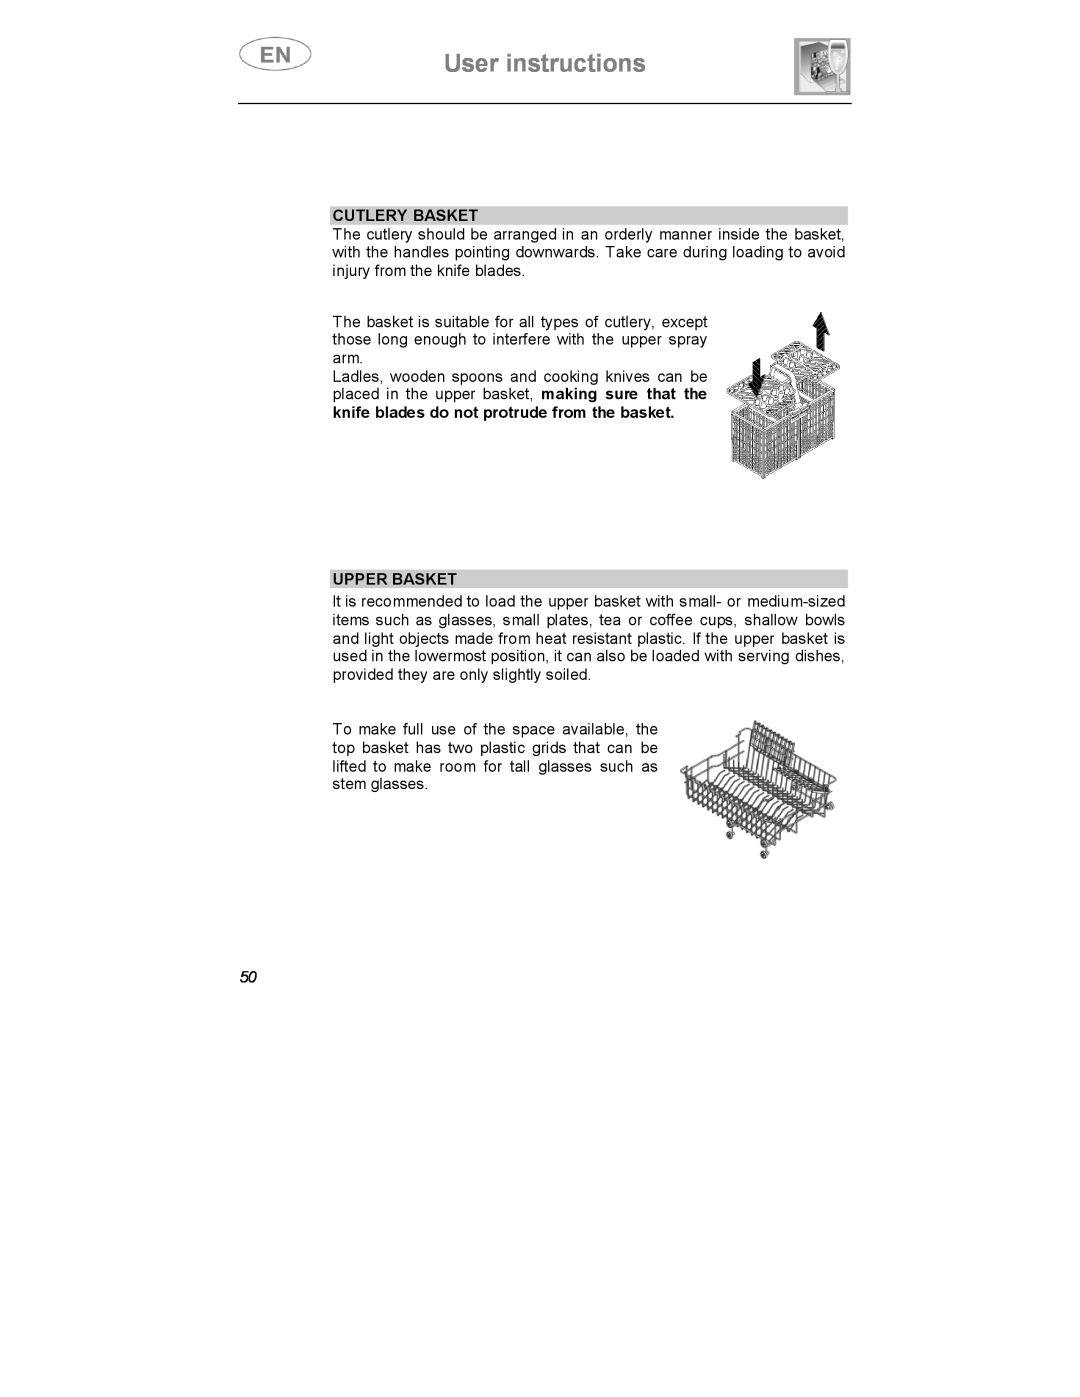 Smeg DWD409SS, DWD409WH instruction manual Cutlery Basket, Upper Basket, User instructions 